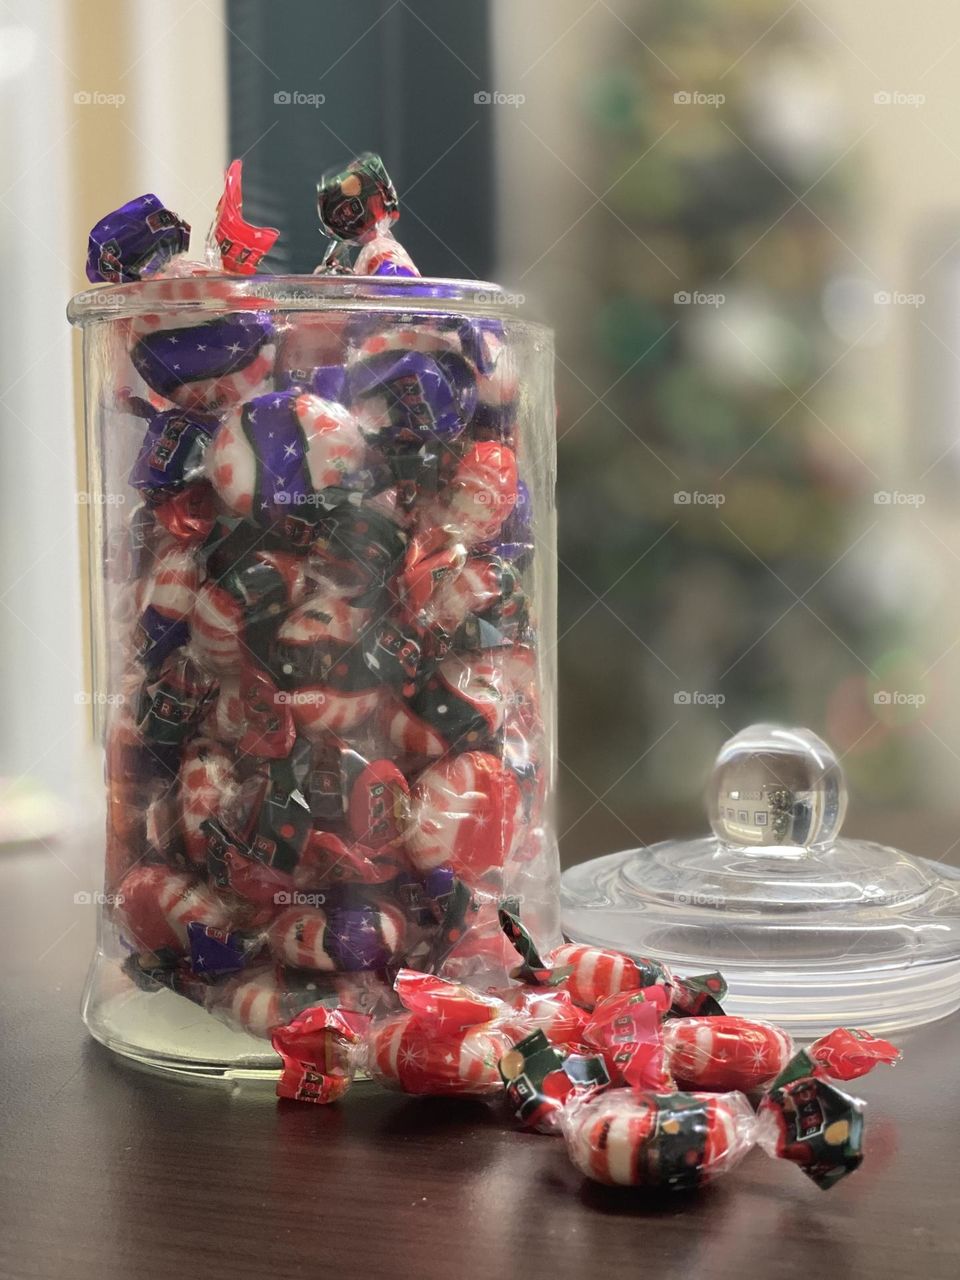 Peppermint candies in a jar